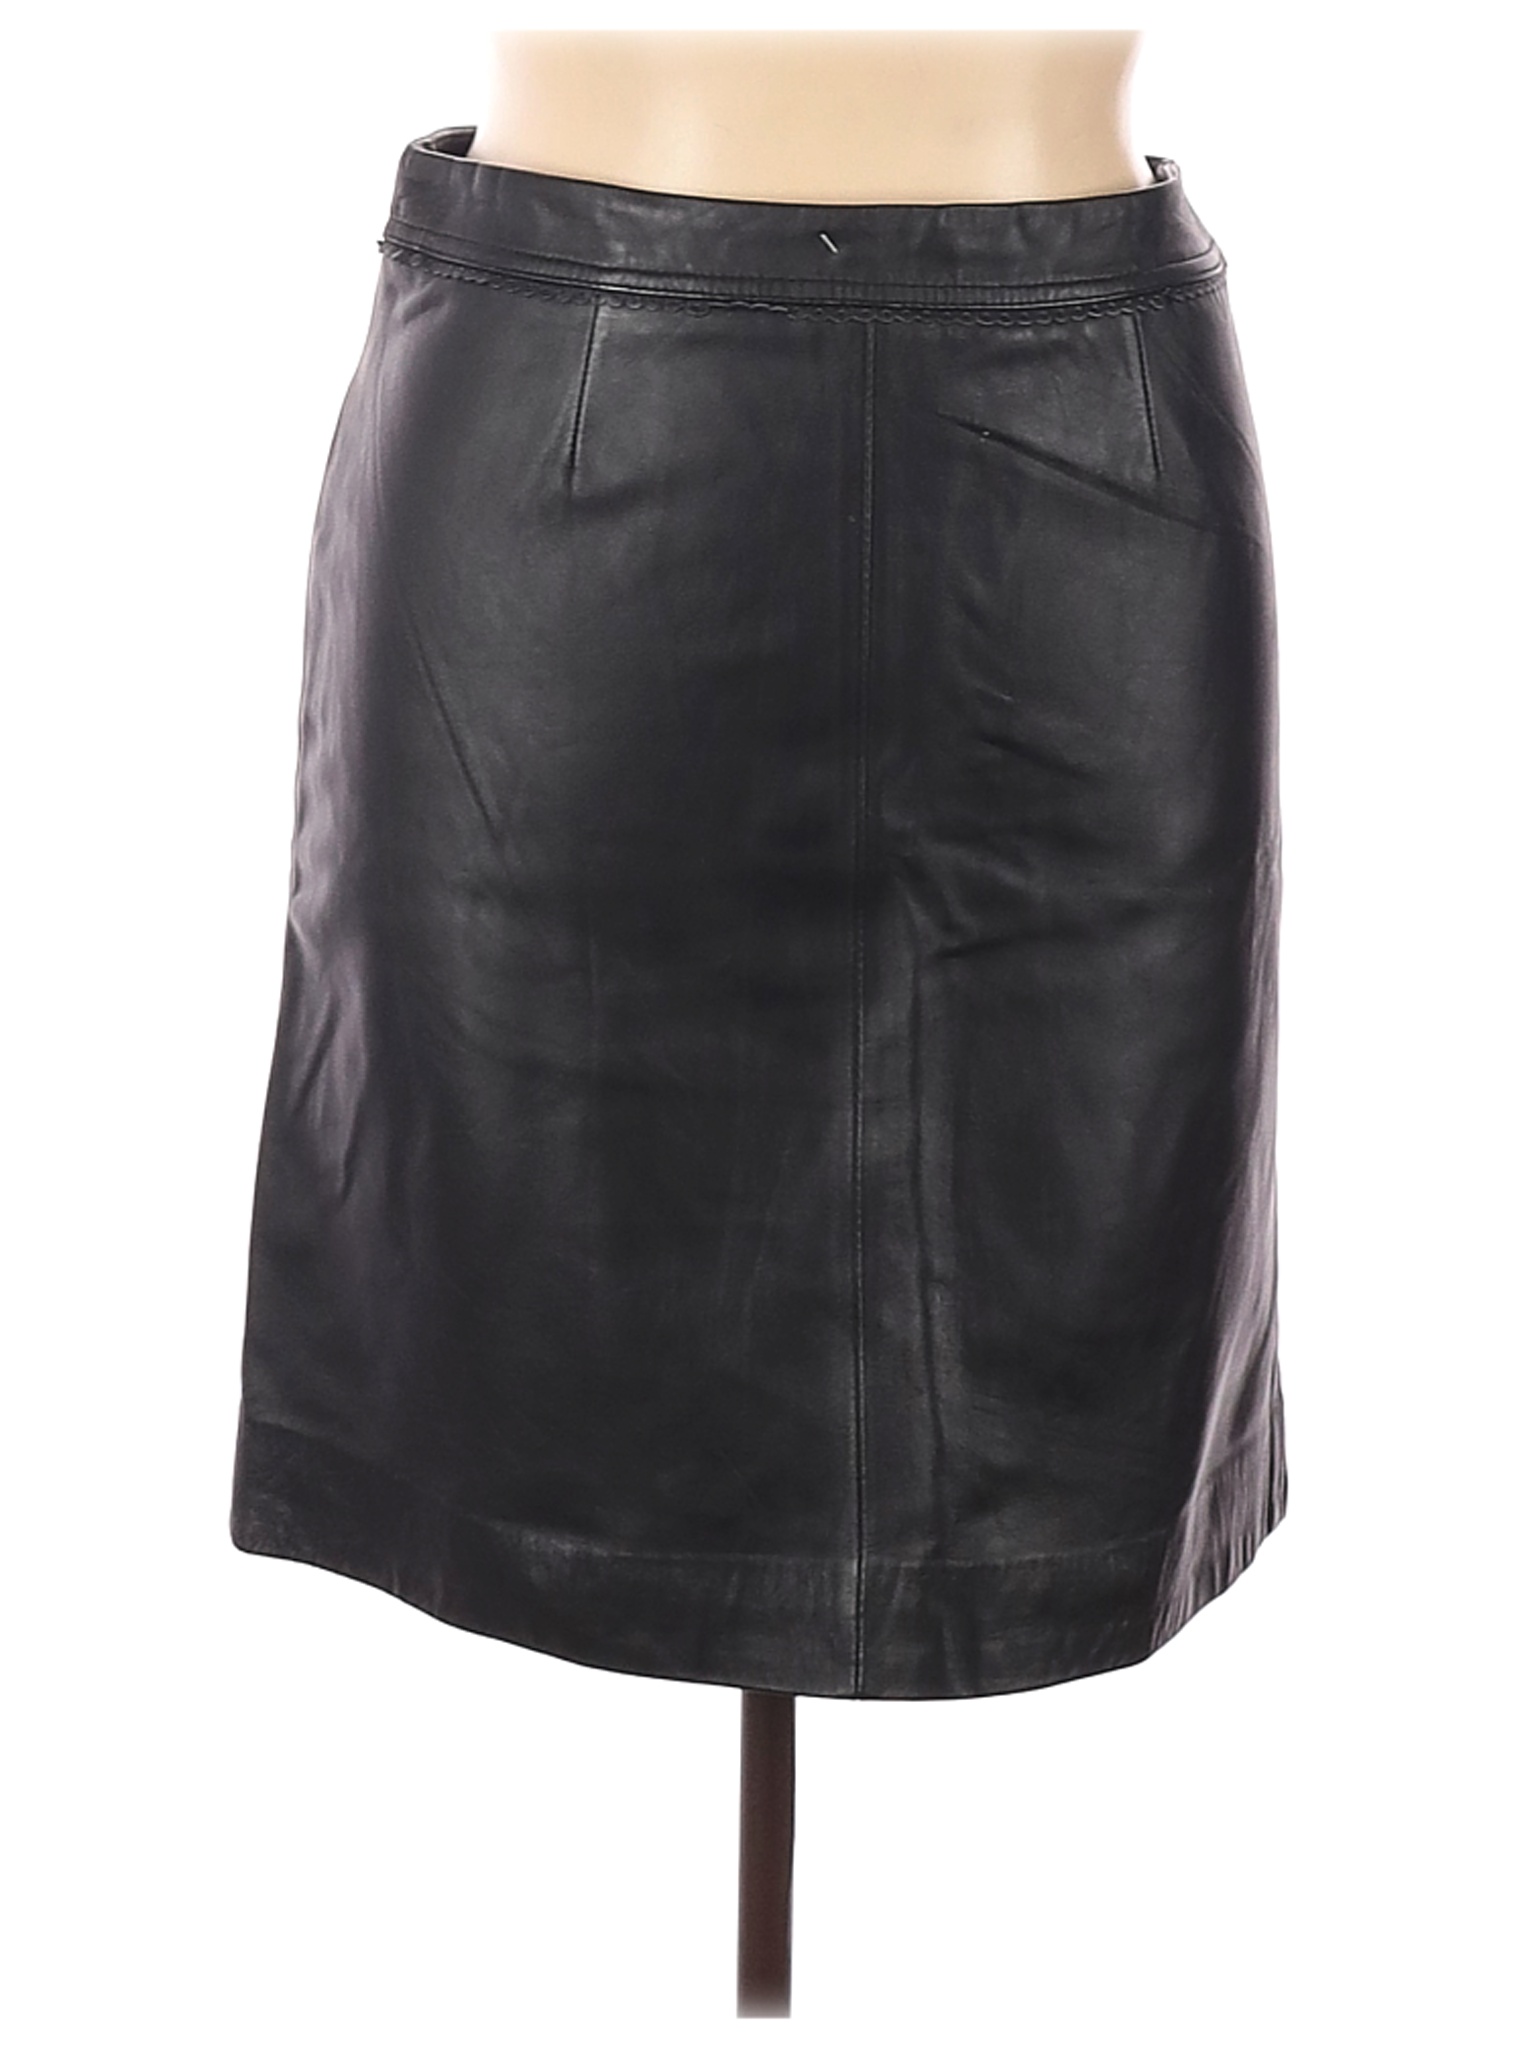 Jaclyn Smith Women Black Leather Skirt 16 | eBay